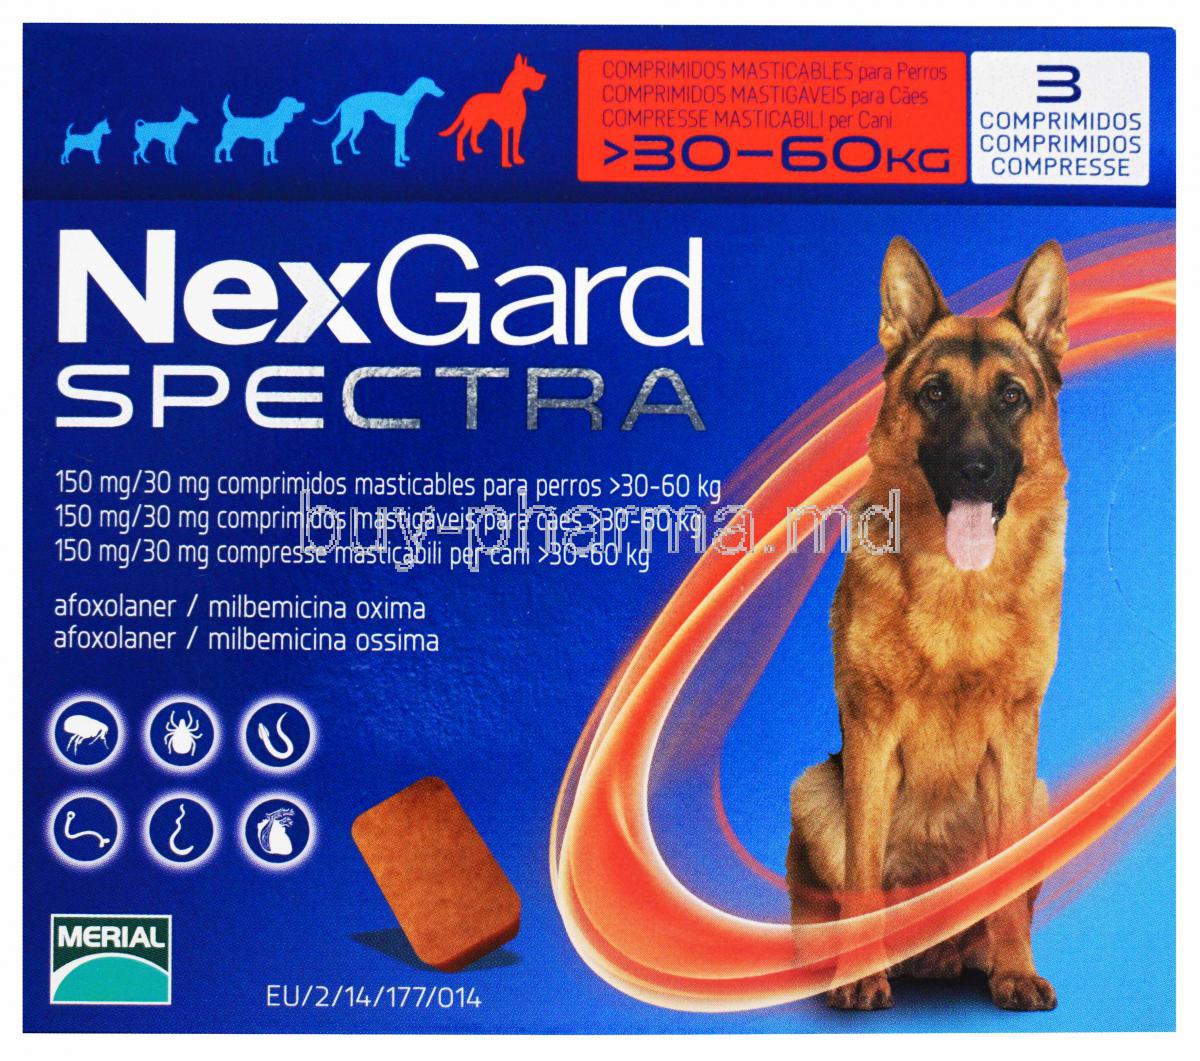 NexGard Spectra, Afoxolaner/ Milbemycin Oxime, >30-60kg, Merial, Box front presentation